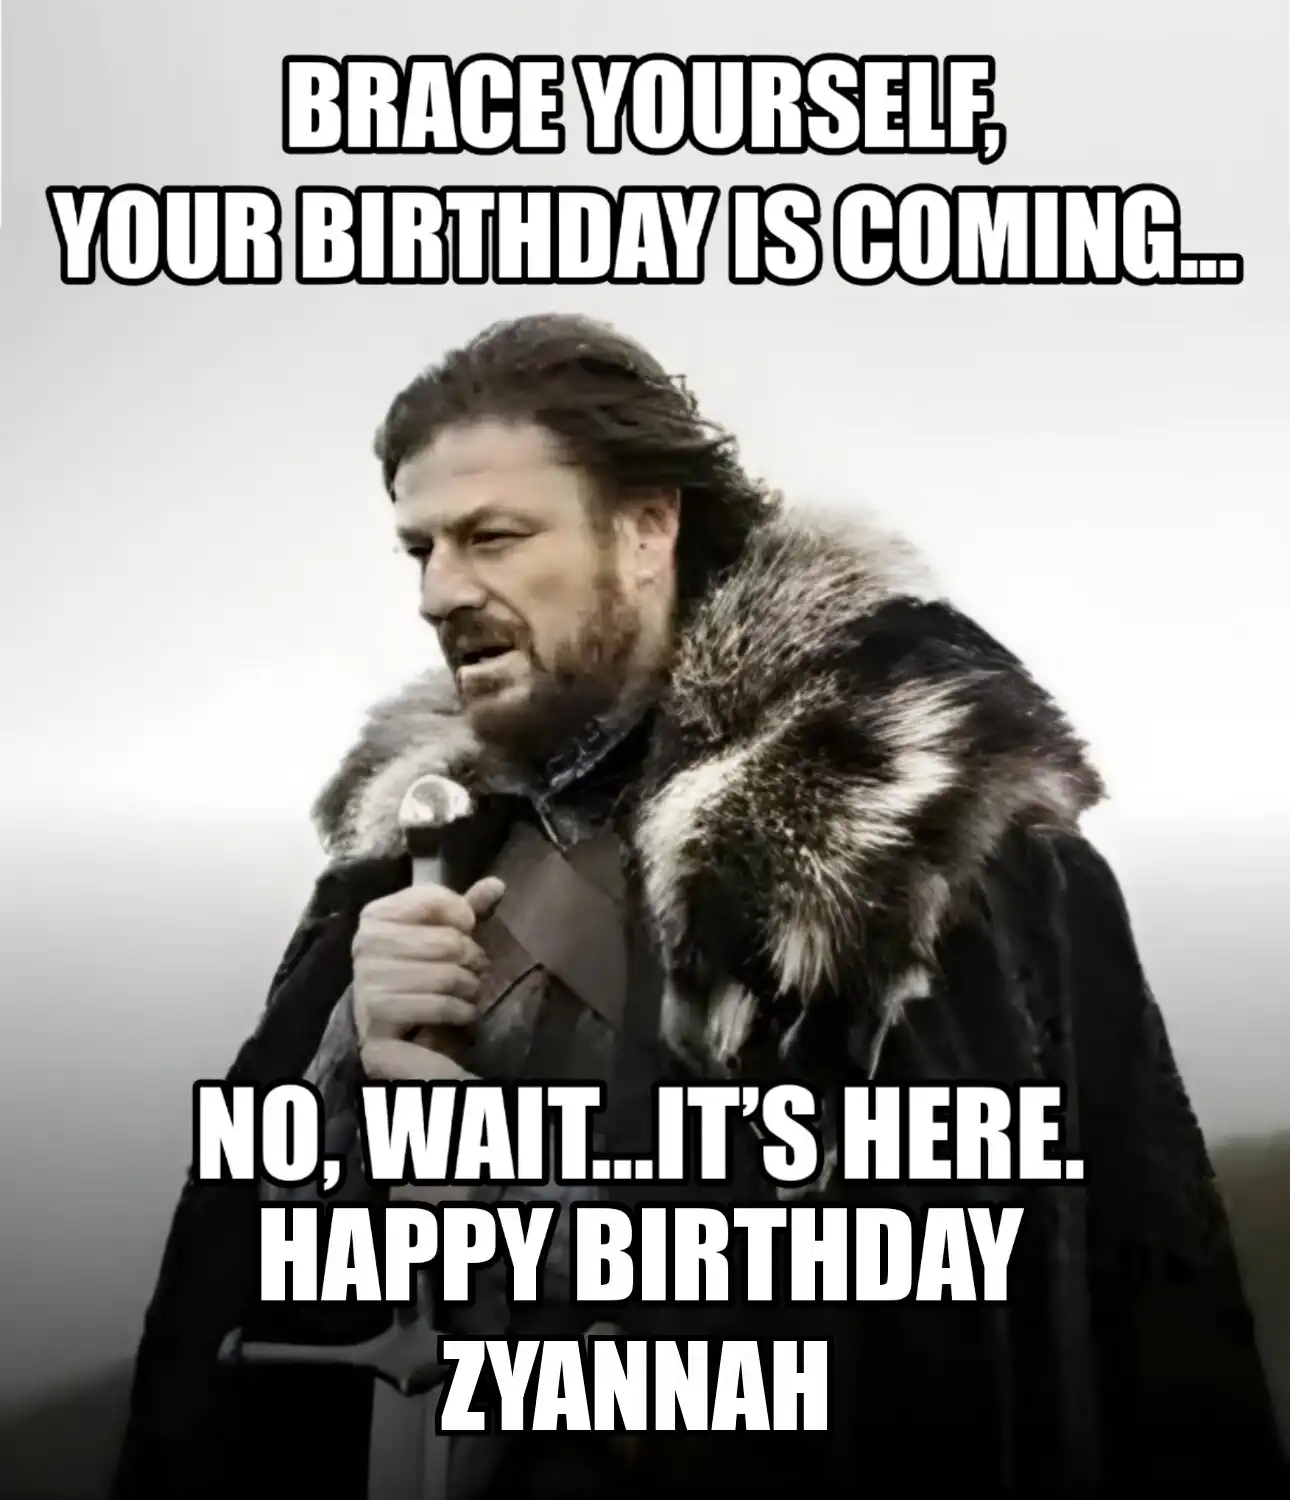 Happy Birthday Zyannah Brace Yourself Your Birthday Is Coming Meme